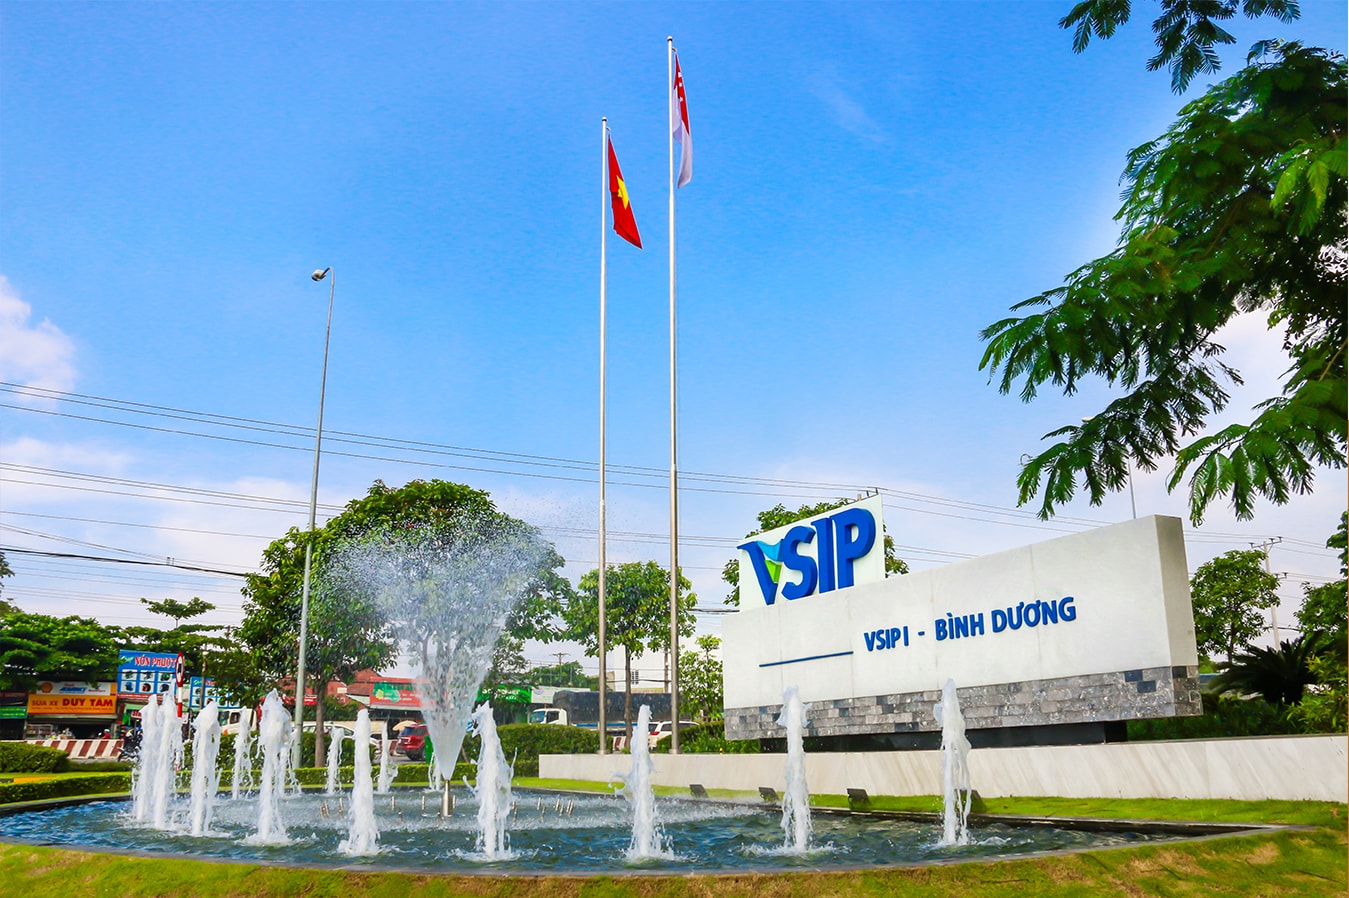 VSIP I - Binh Duong